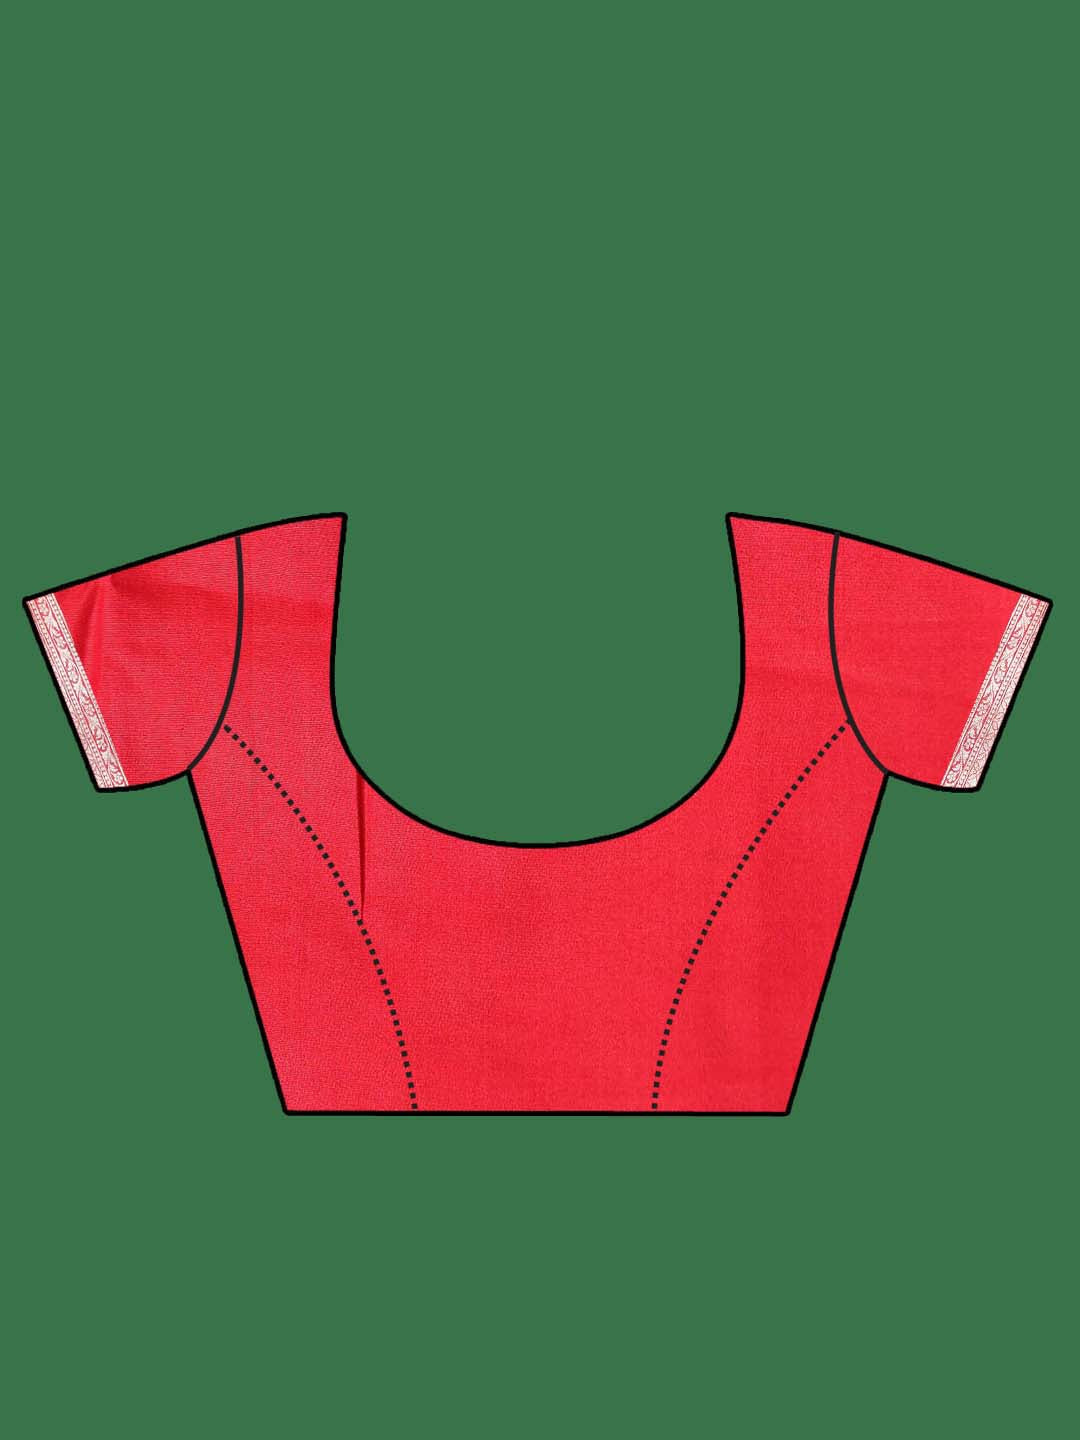 Indethnic Banarasi Red Ethnic Motifs Woven Design Festive Wear Saree - Blouse Piece View